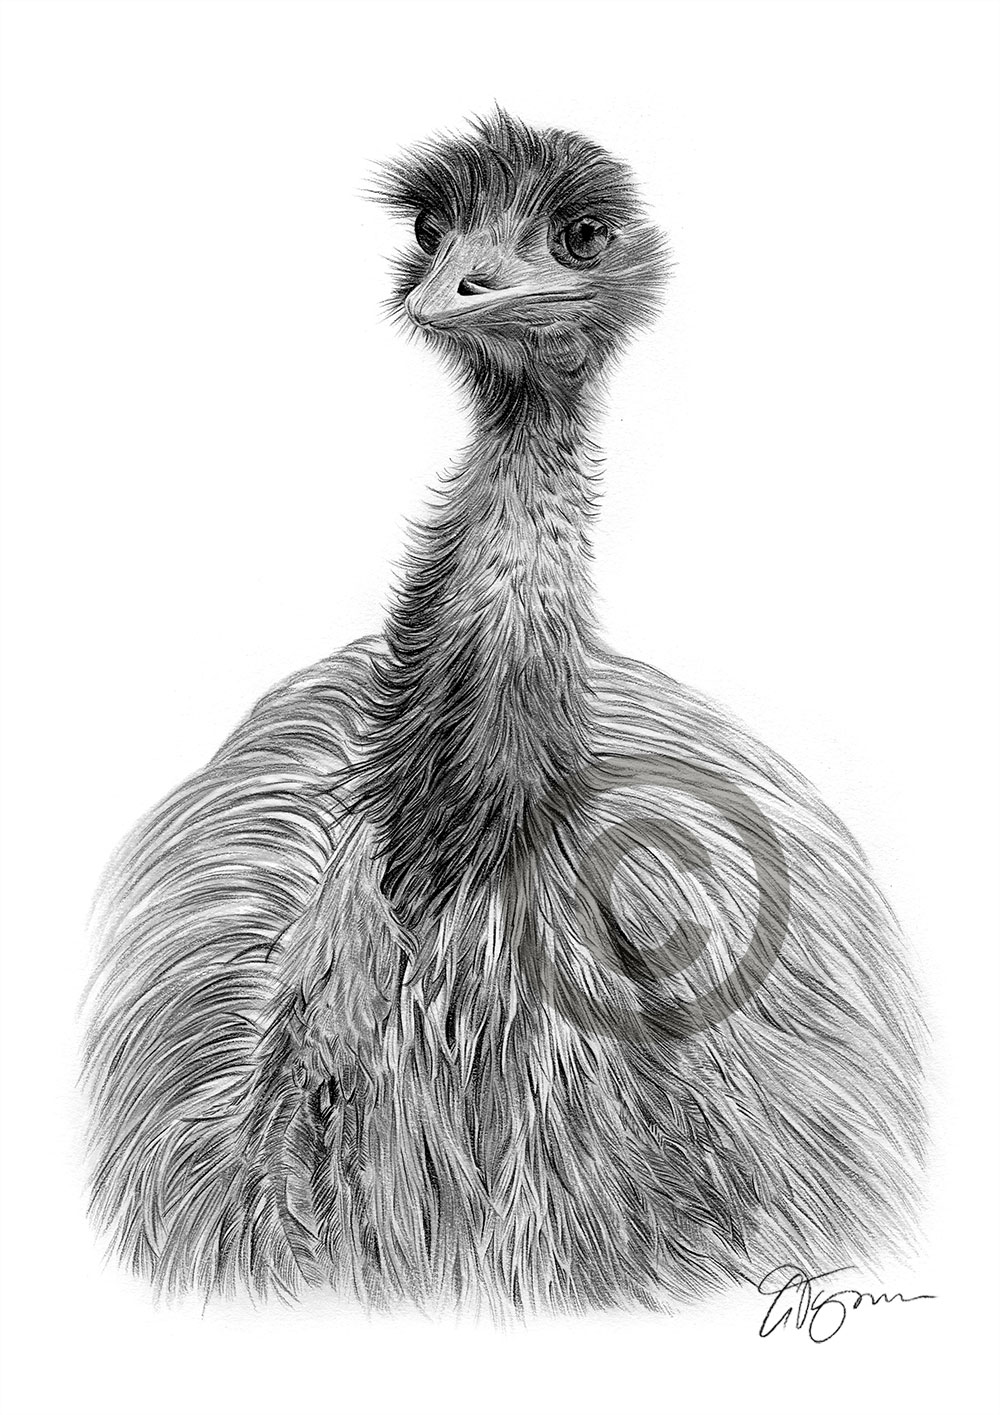 Pencil drawing of an emu by artist Gary Tymon